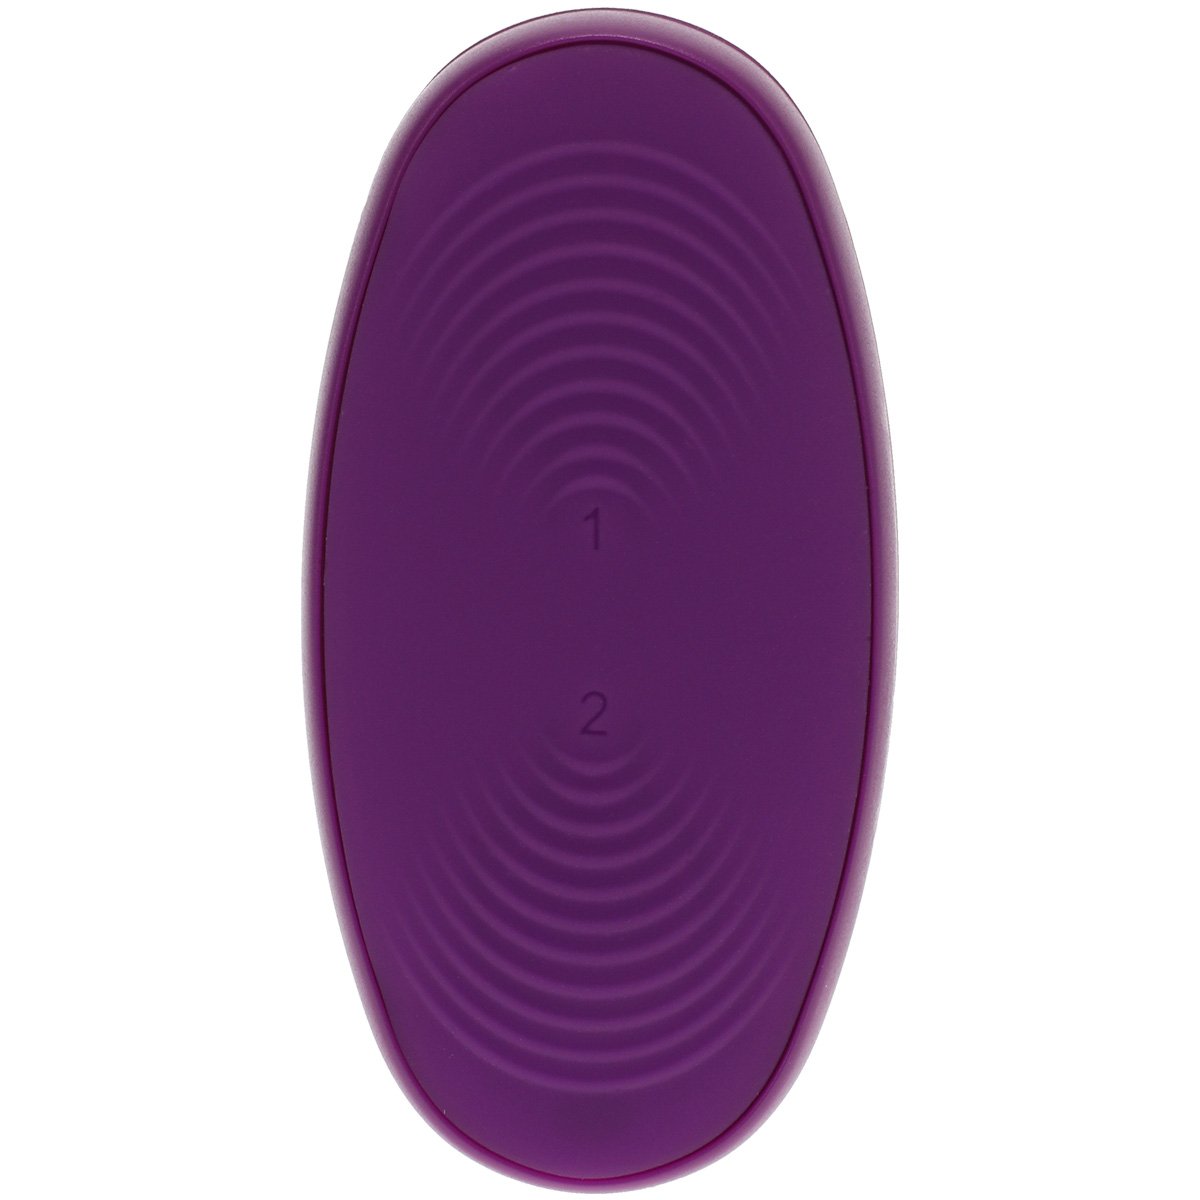 Doc Johnson Tryst V2 Bendable Multi Erogenous Zone Silicone Massager - Purple